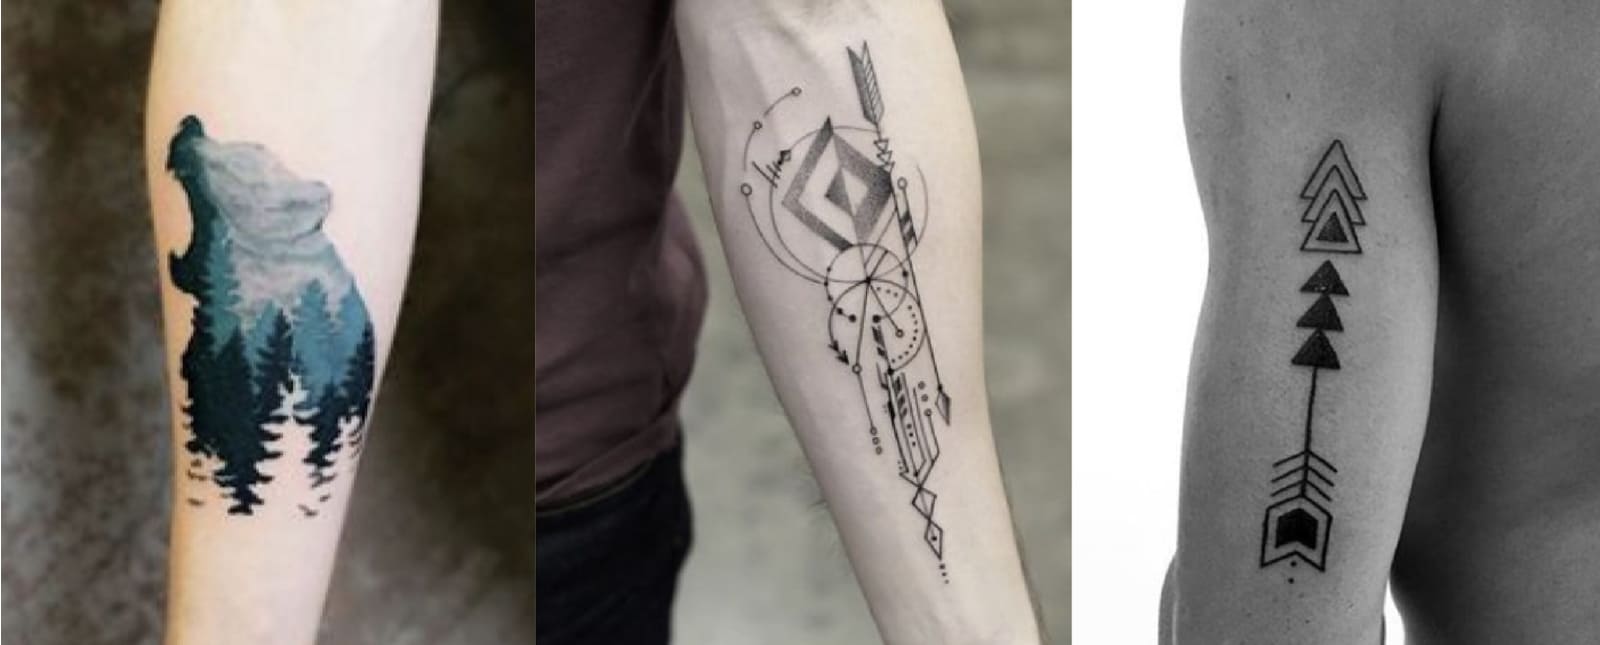 24 Creative Arm Tattoo Designs For Men That All Women Love